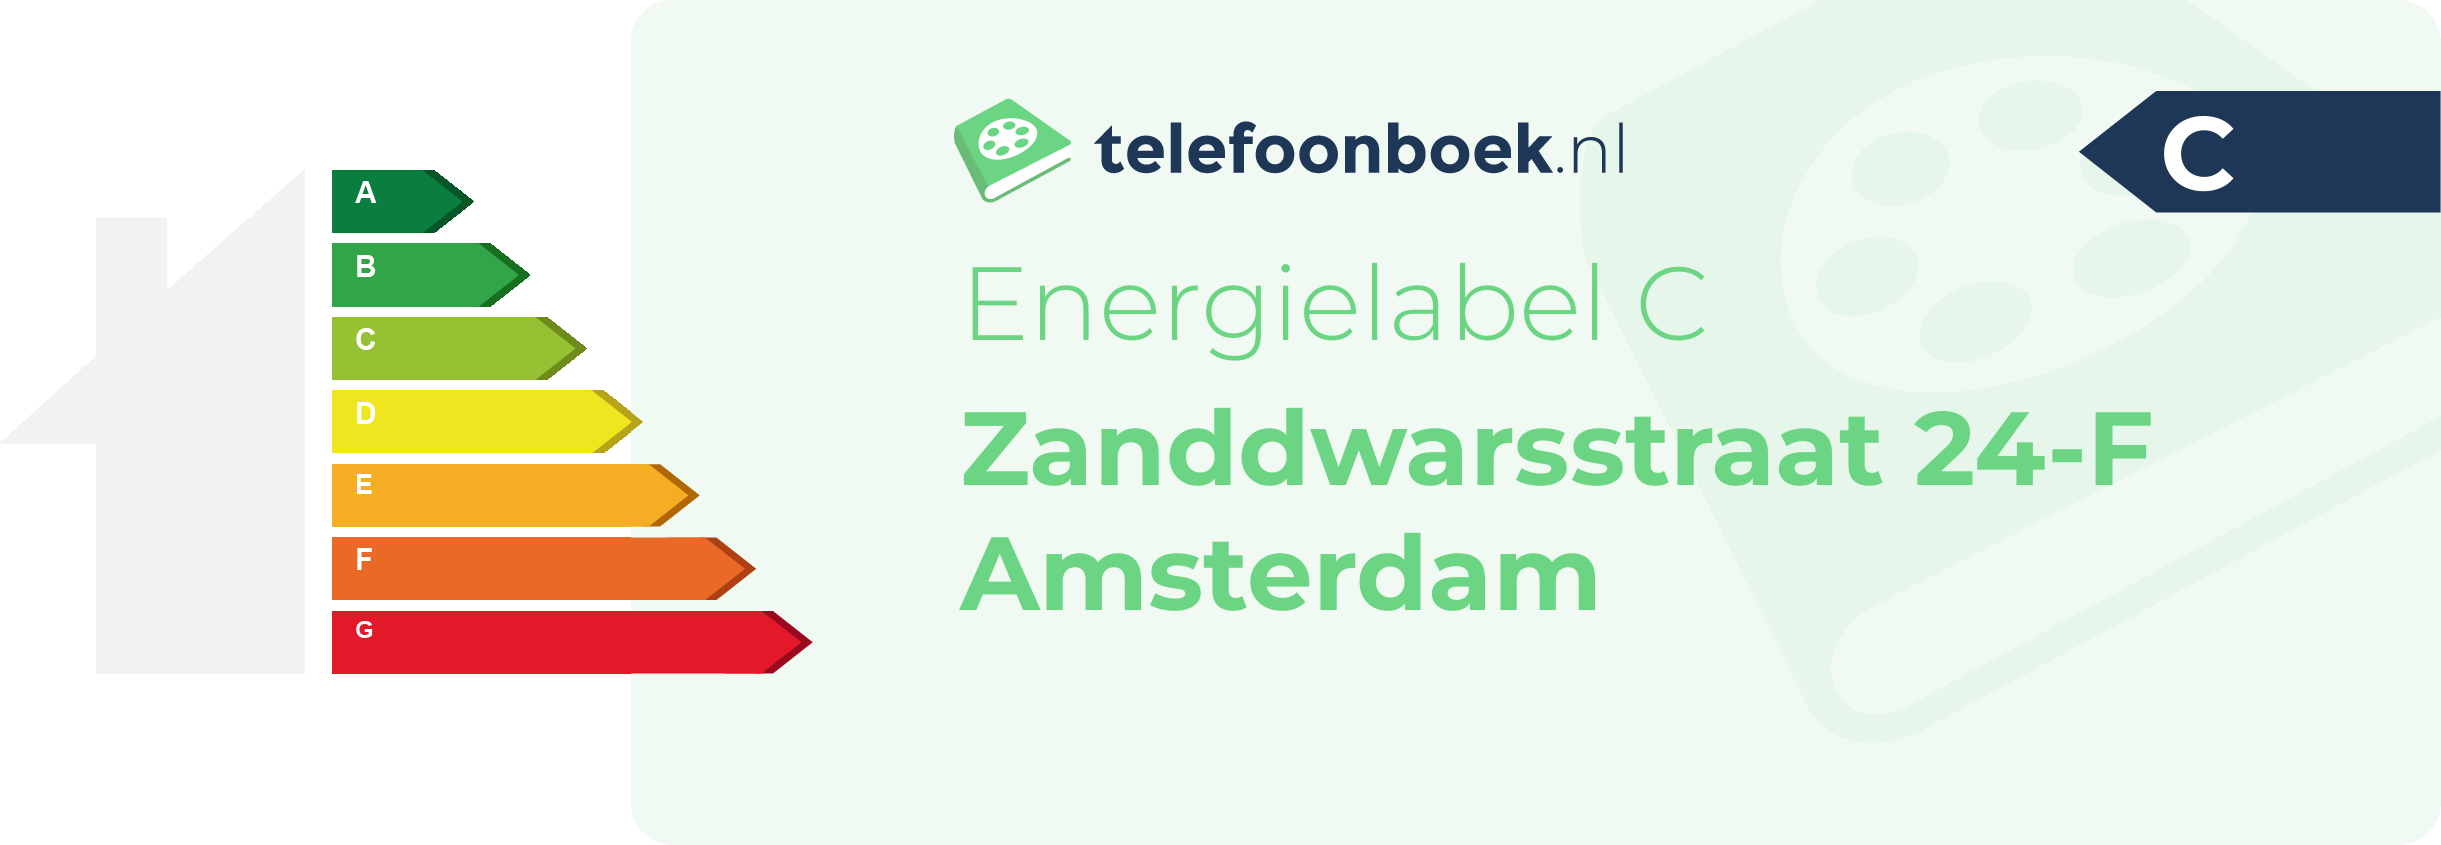 Energielabel Zanddwarsstraat 24-F Amsterdam